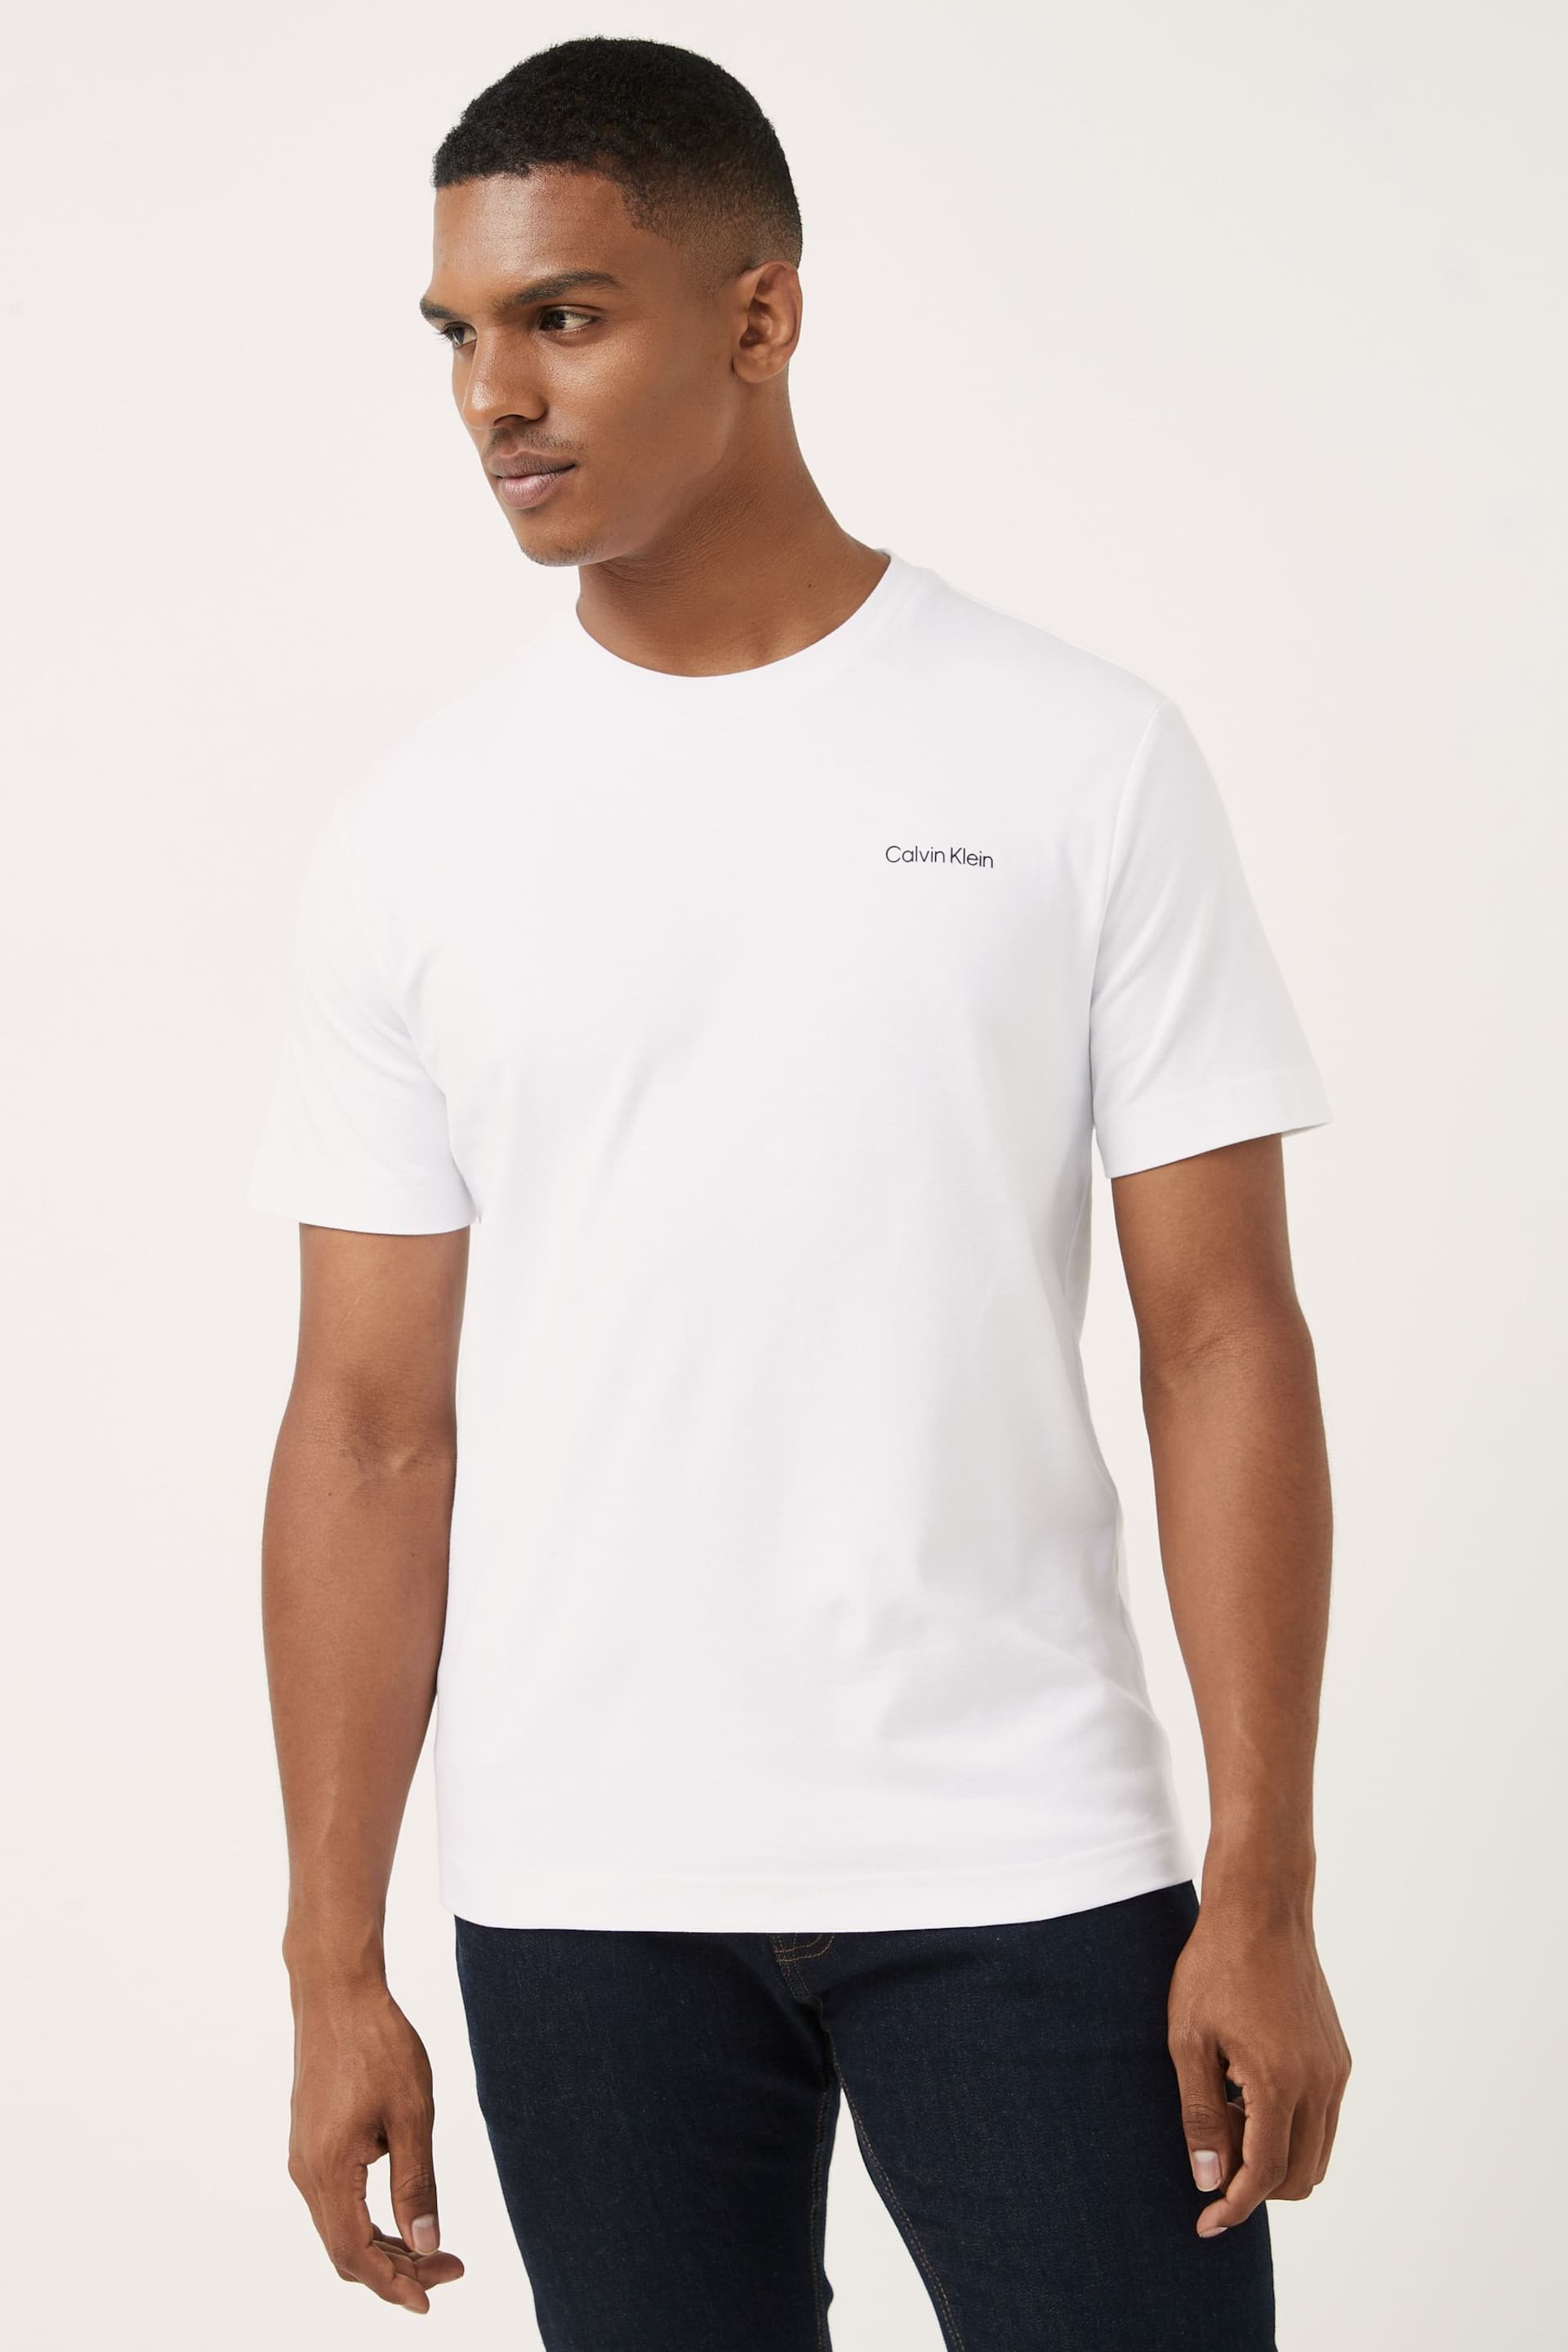 Calvin Klein White Interlock Logo T-Shirt - Image 1 of 5